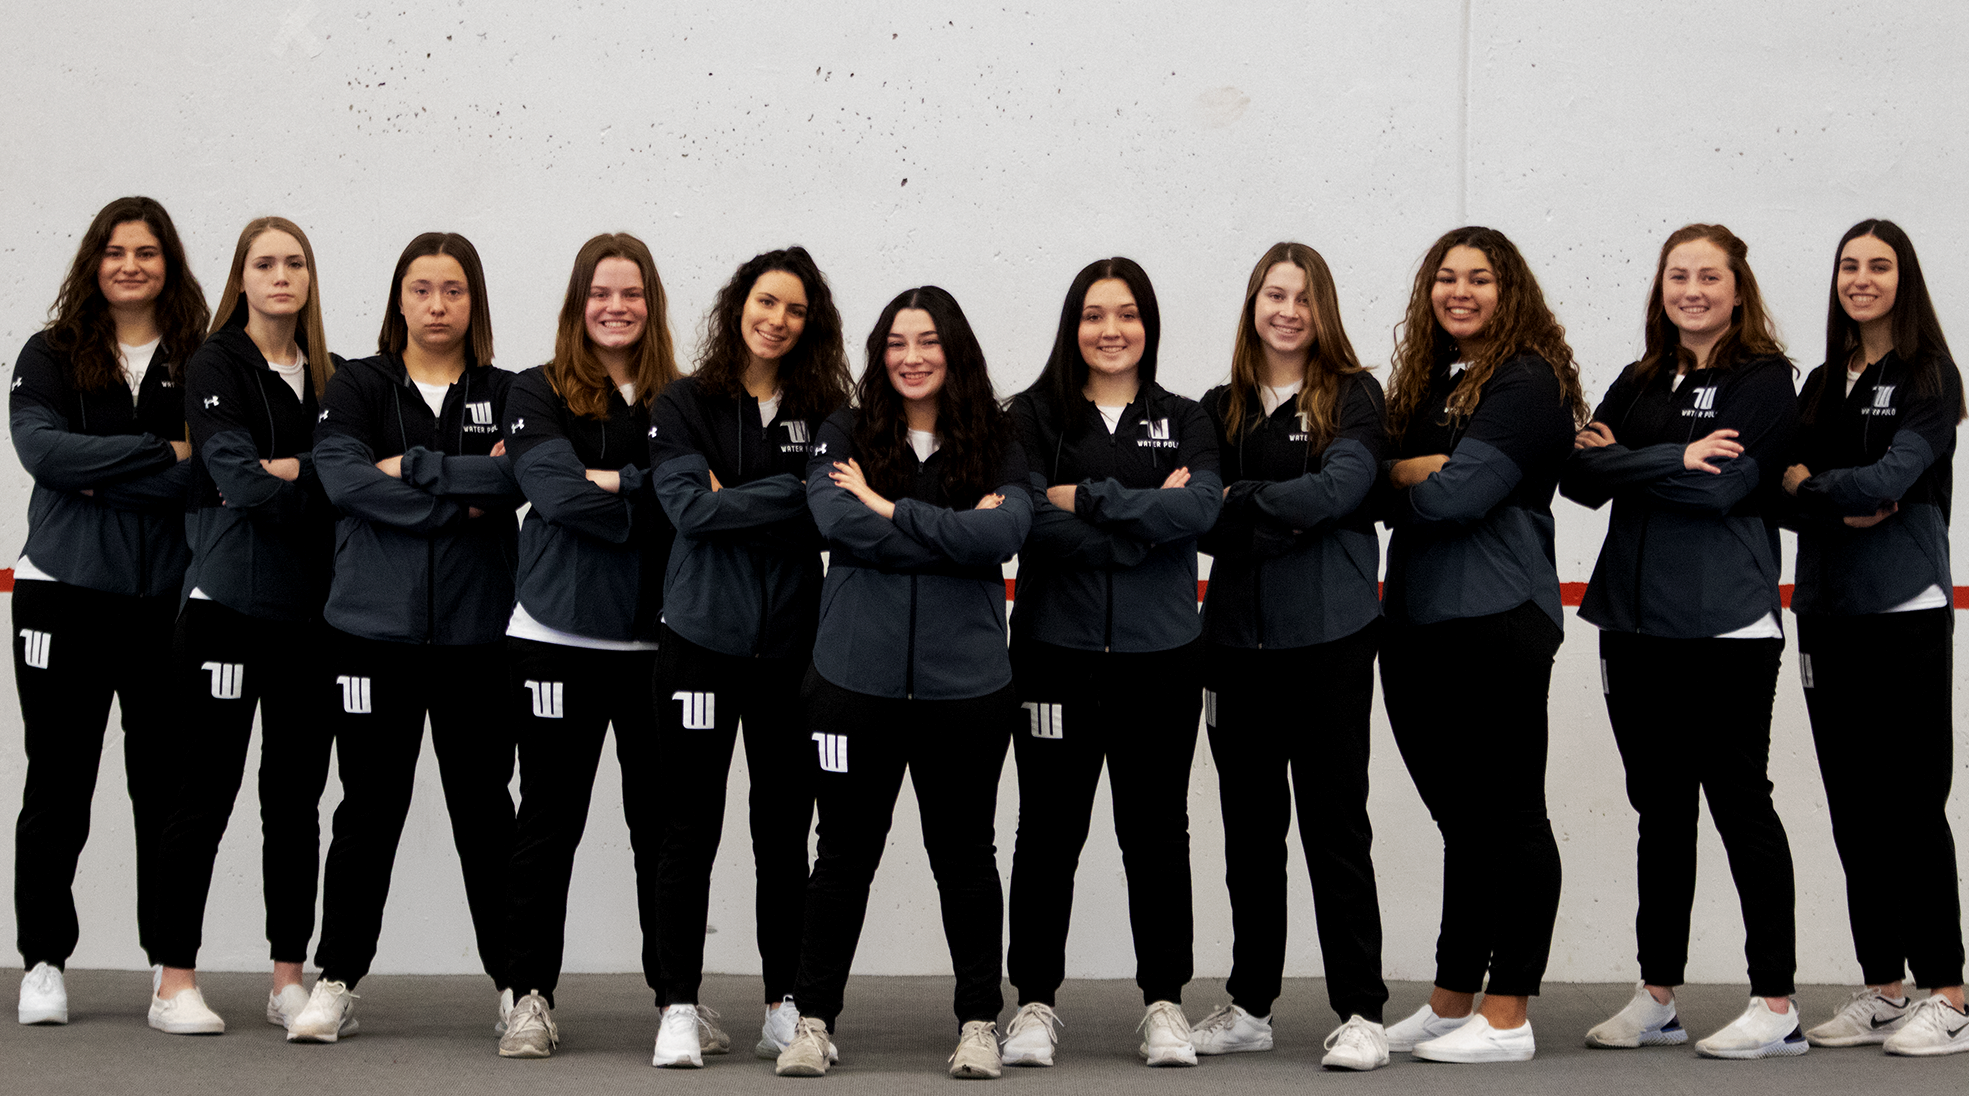 2020-21 Wittenberg Women's Water Polo Team Photo